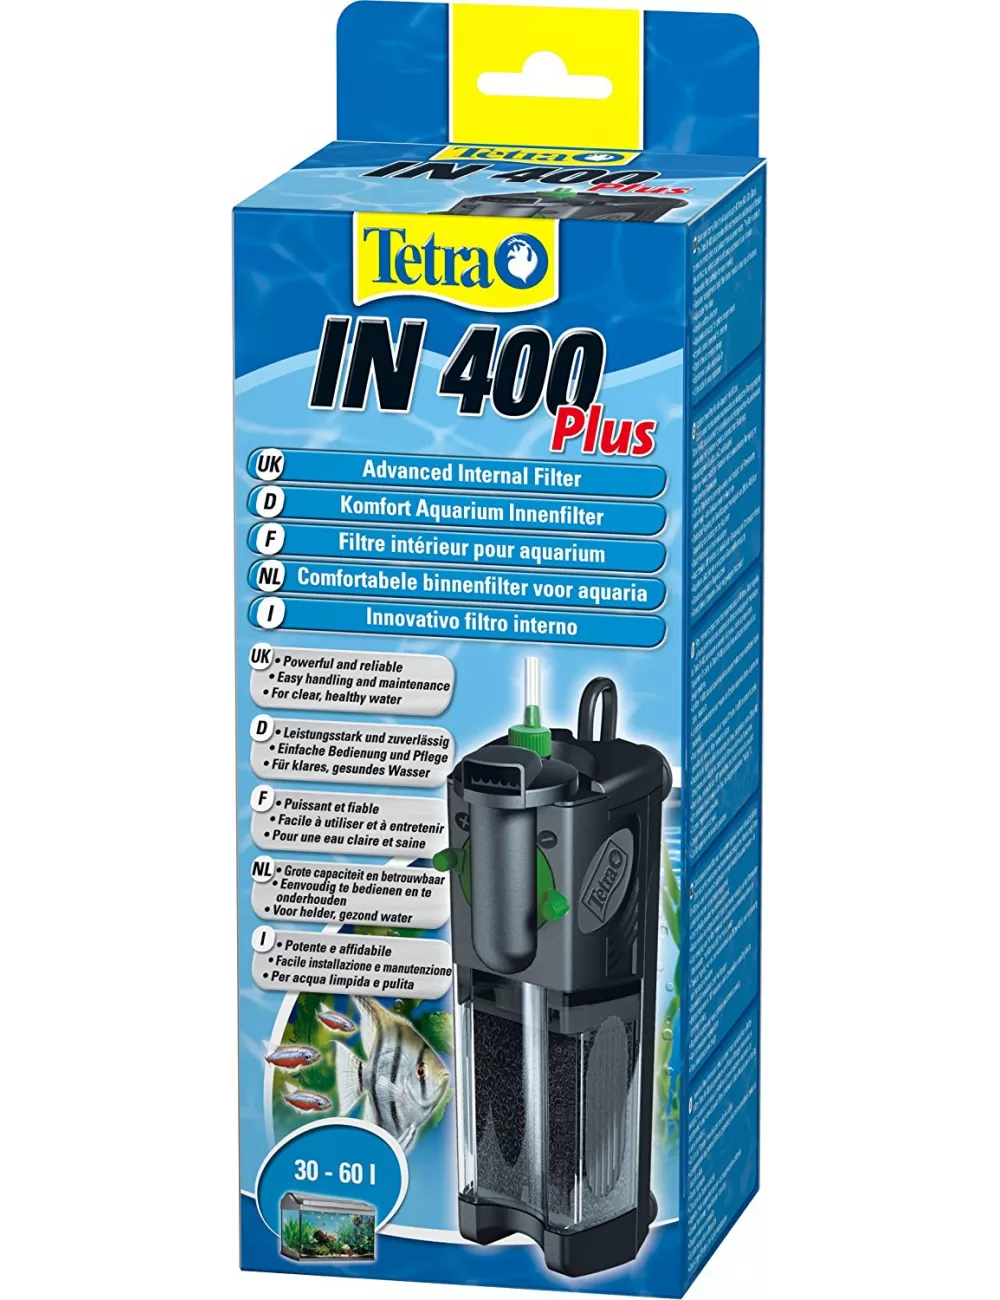 TETRA - IN 400 Plus - Filtre interne pour aquarium de jusqu'à 60